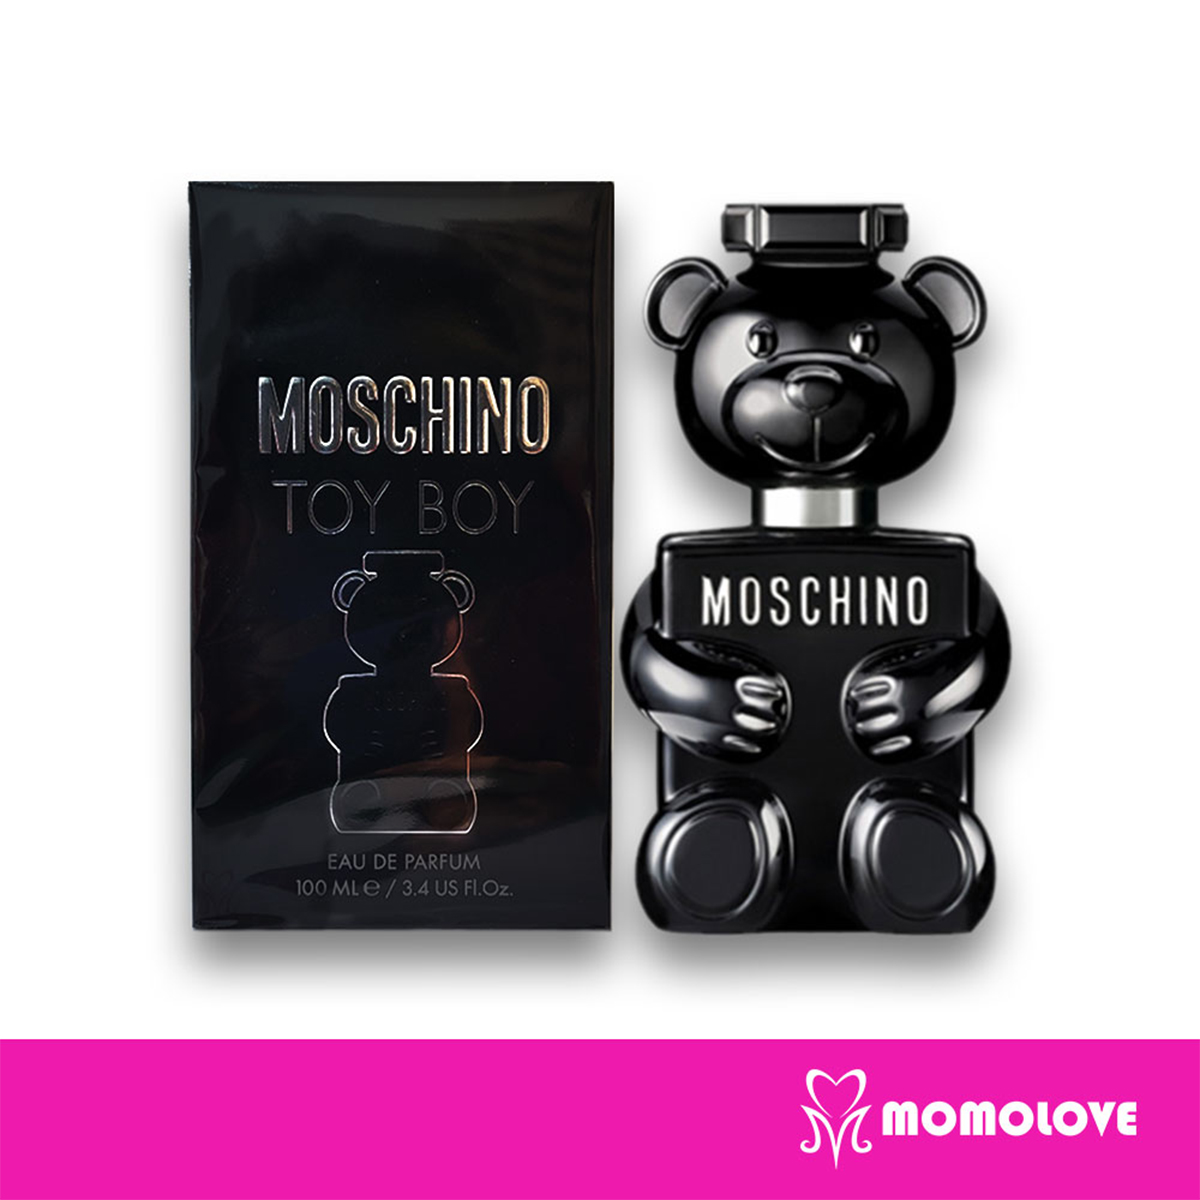 Moschino TOY BOY Eau DE Parfum 100ml EDP FOR MEN - Momolove